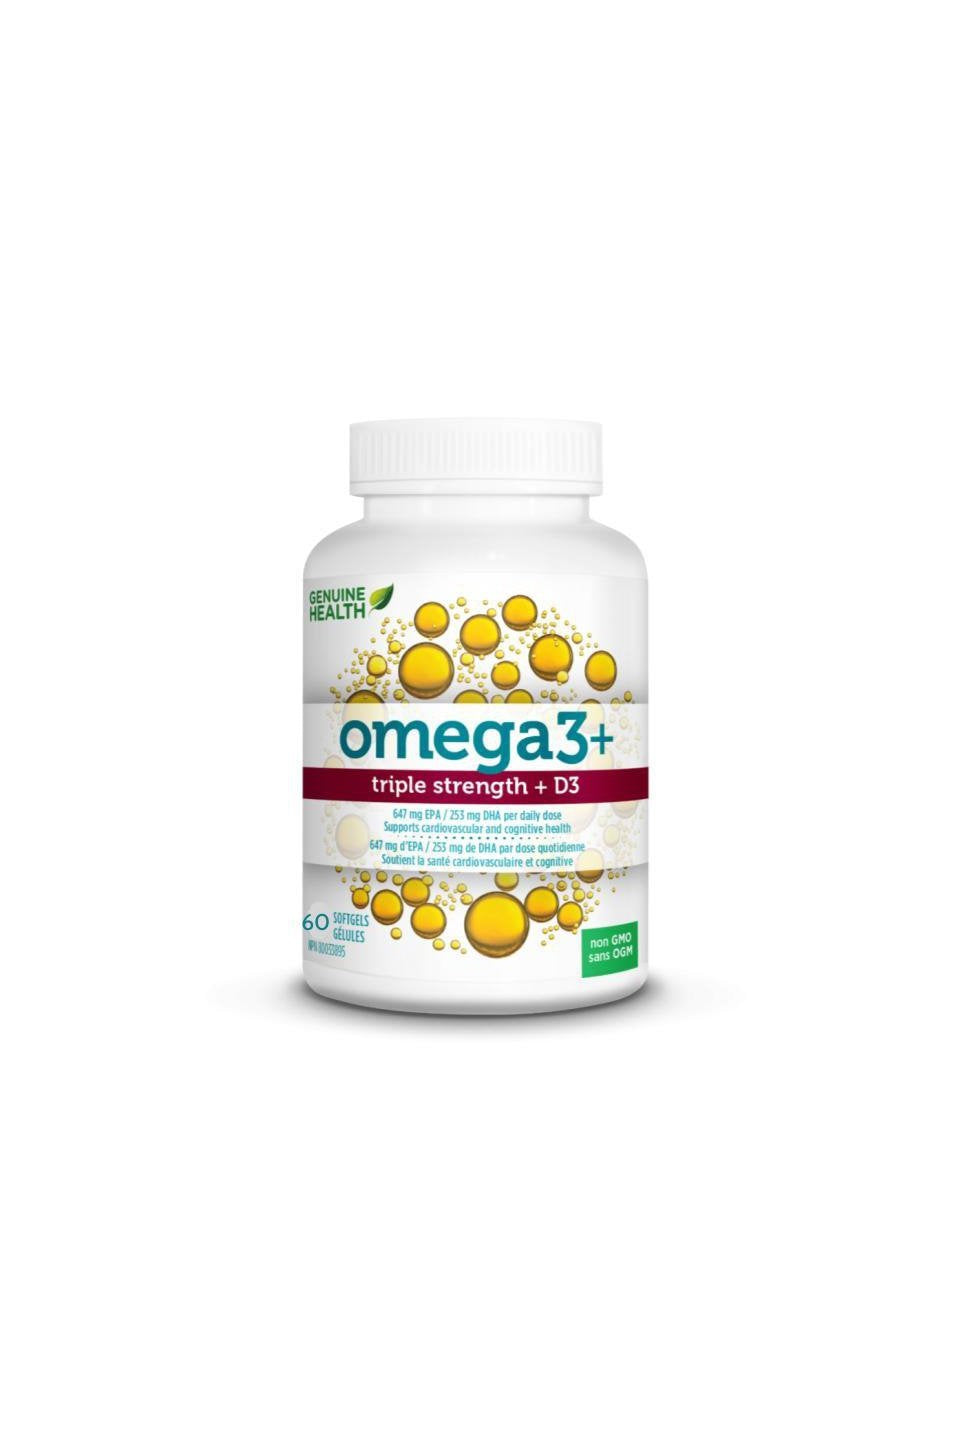 Genuine Health Omega3+ Triple Strength + D3 60s